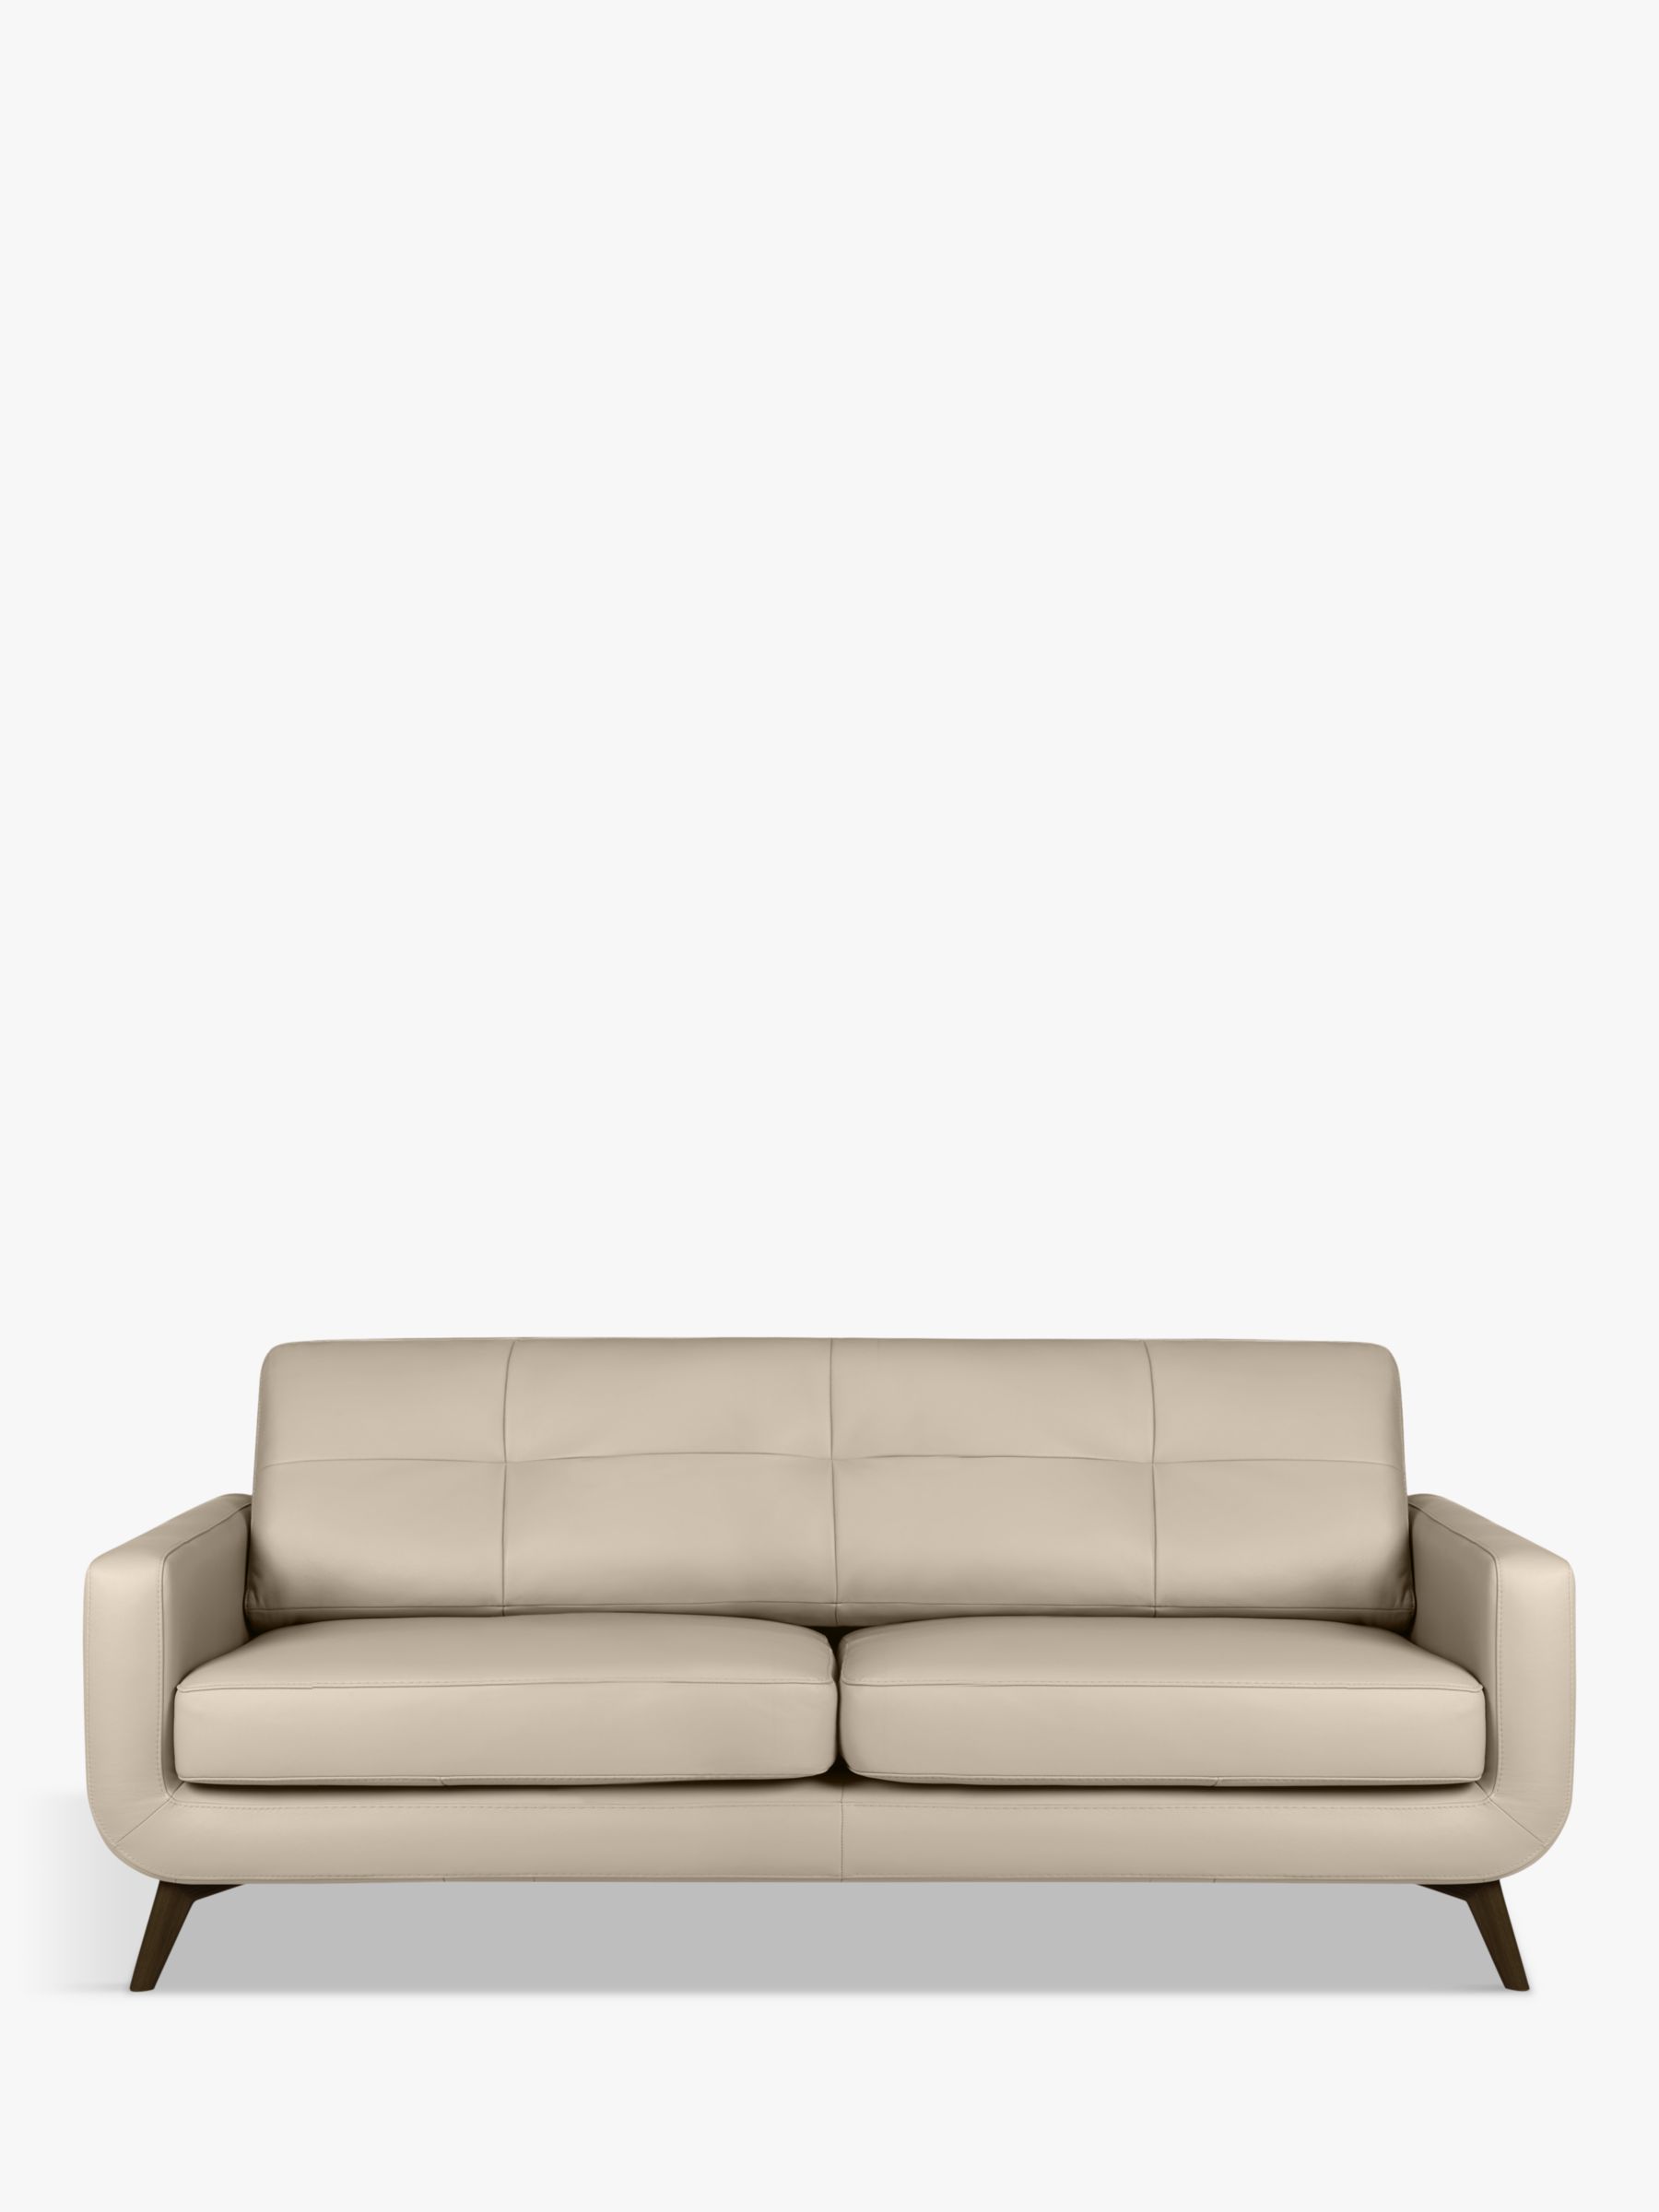 Barbican Range, John Lewis Barbican Large 3 Seater Leather Sofa, Dark Leg, Nature Putty